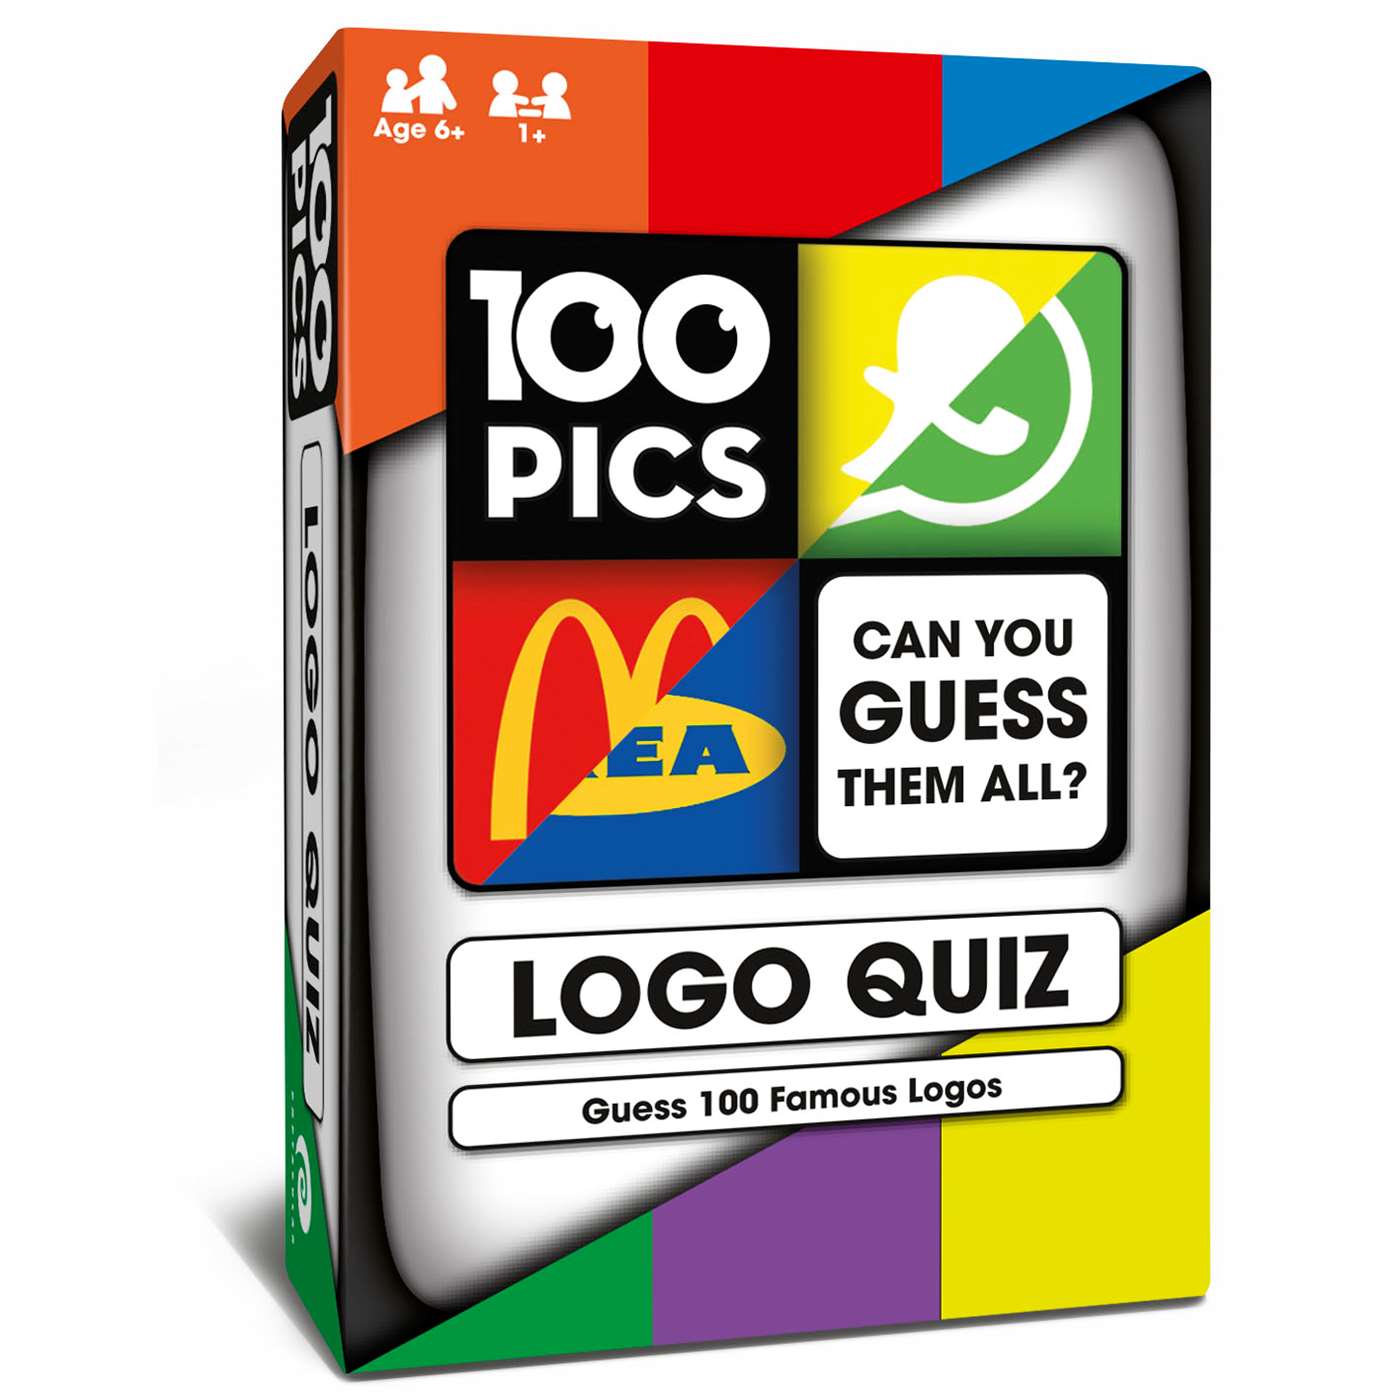 100 PICS - LOGOS Image